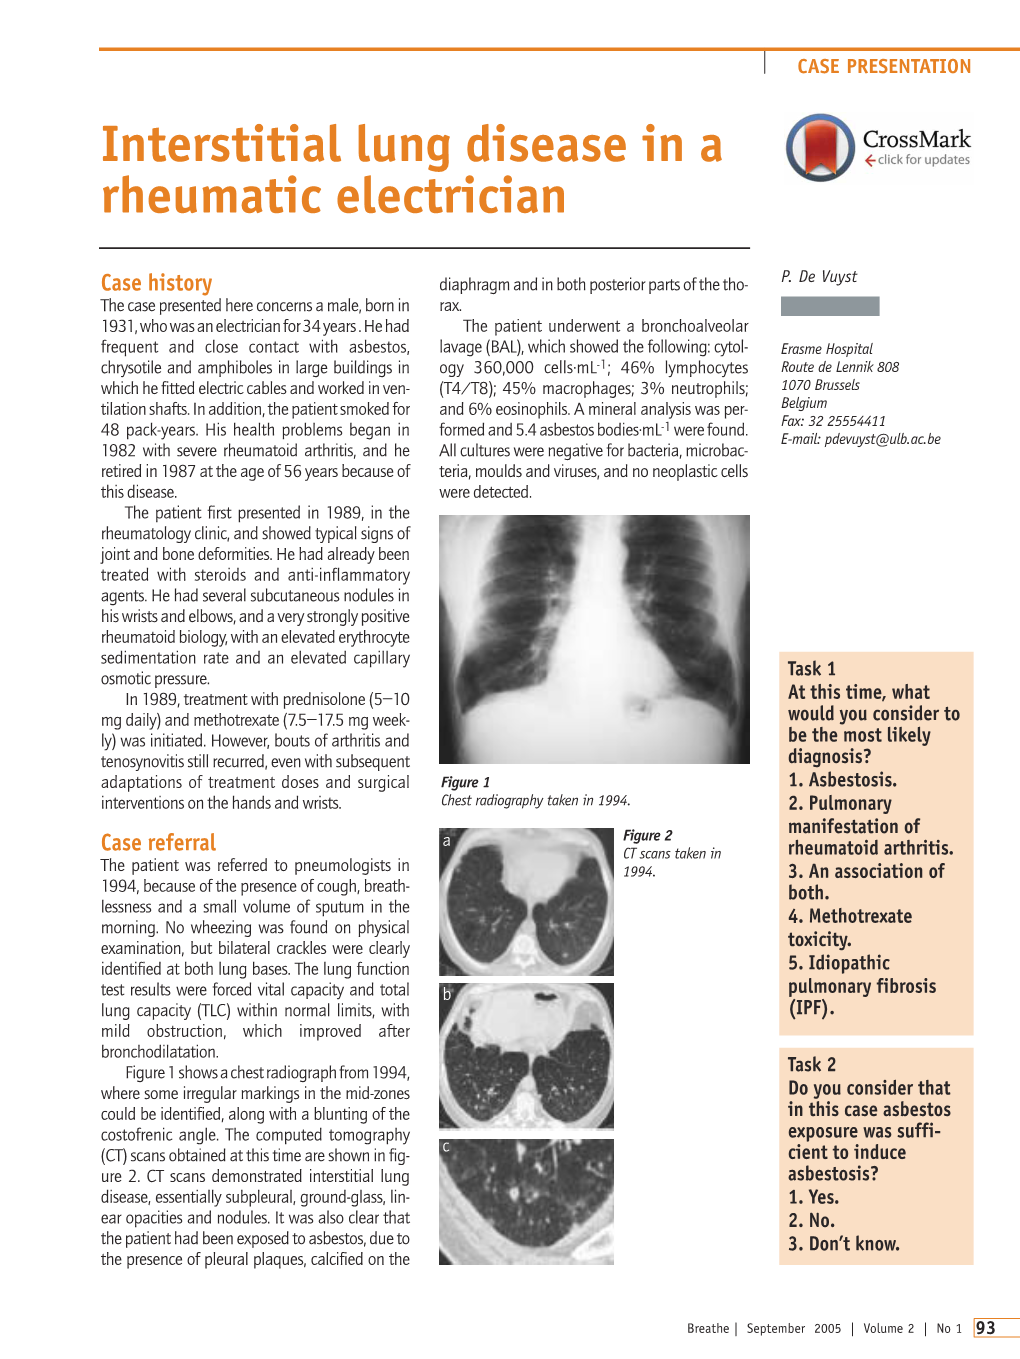 Interstitial Lung Disease in a Rheumatic Electrician